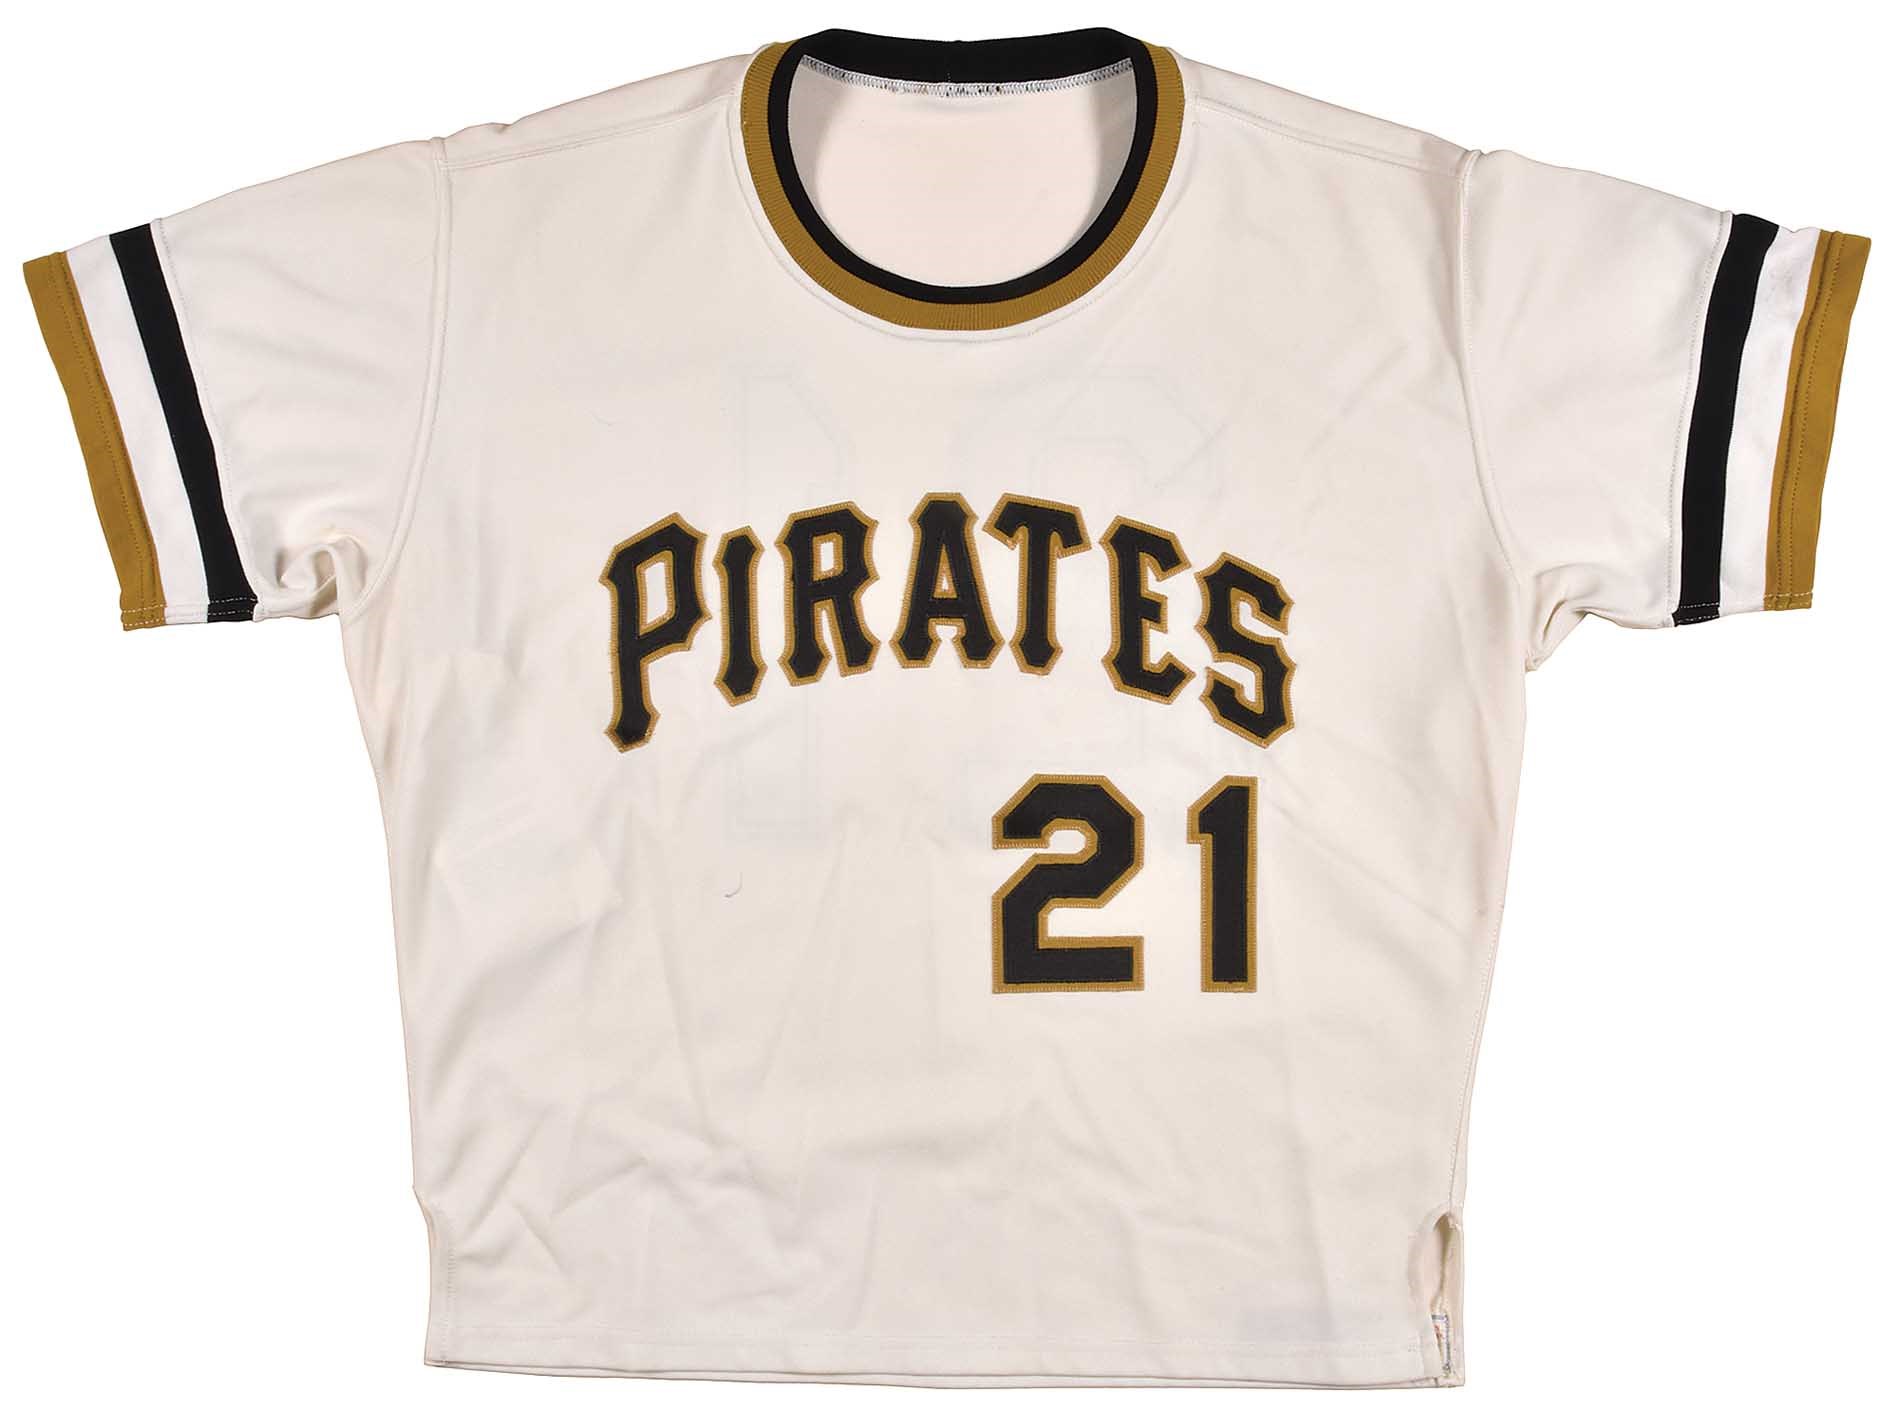 1971 pittsburgh pirates uniforms